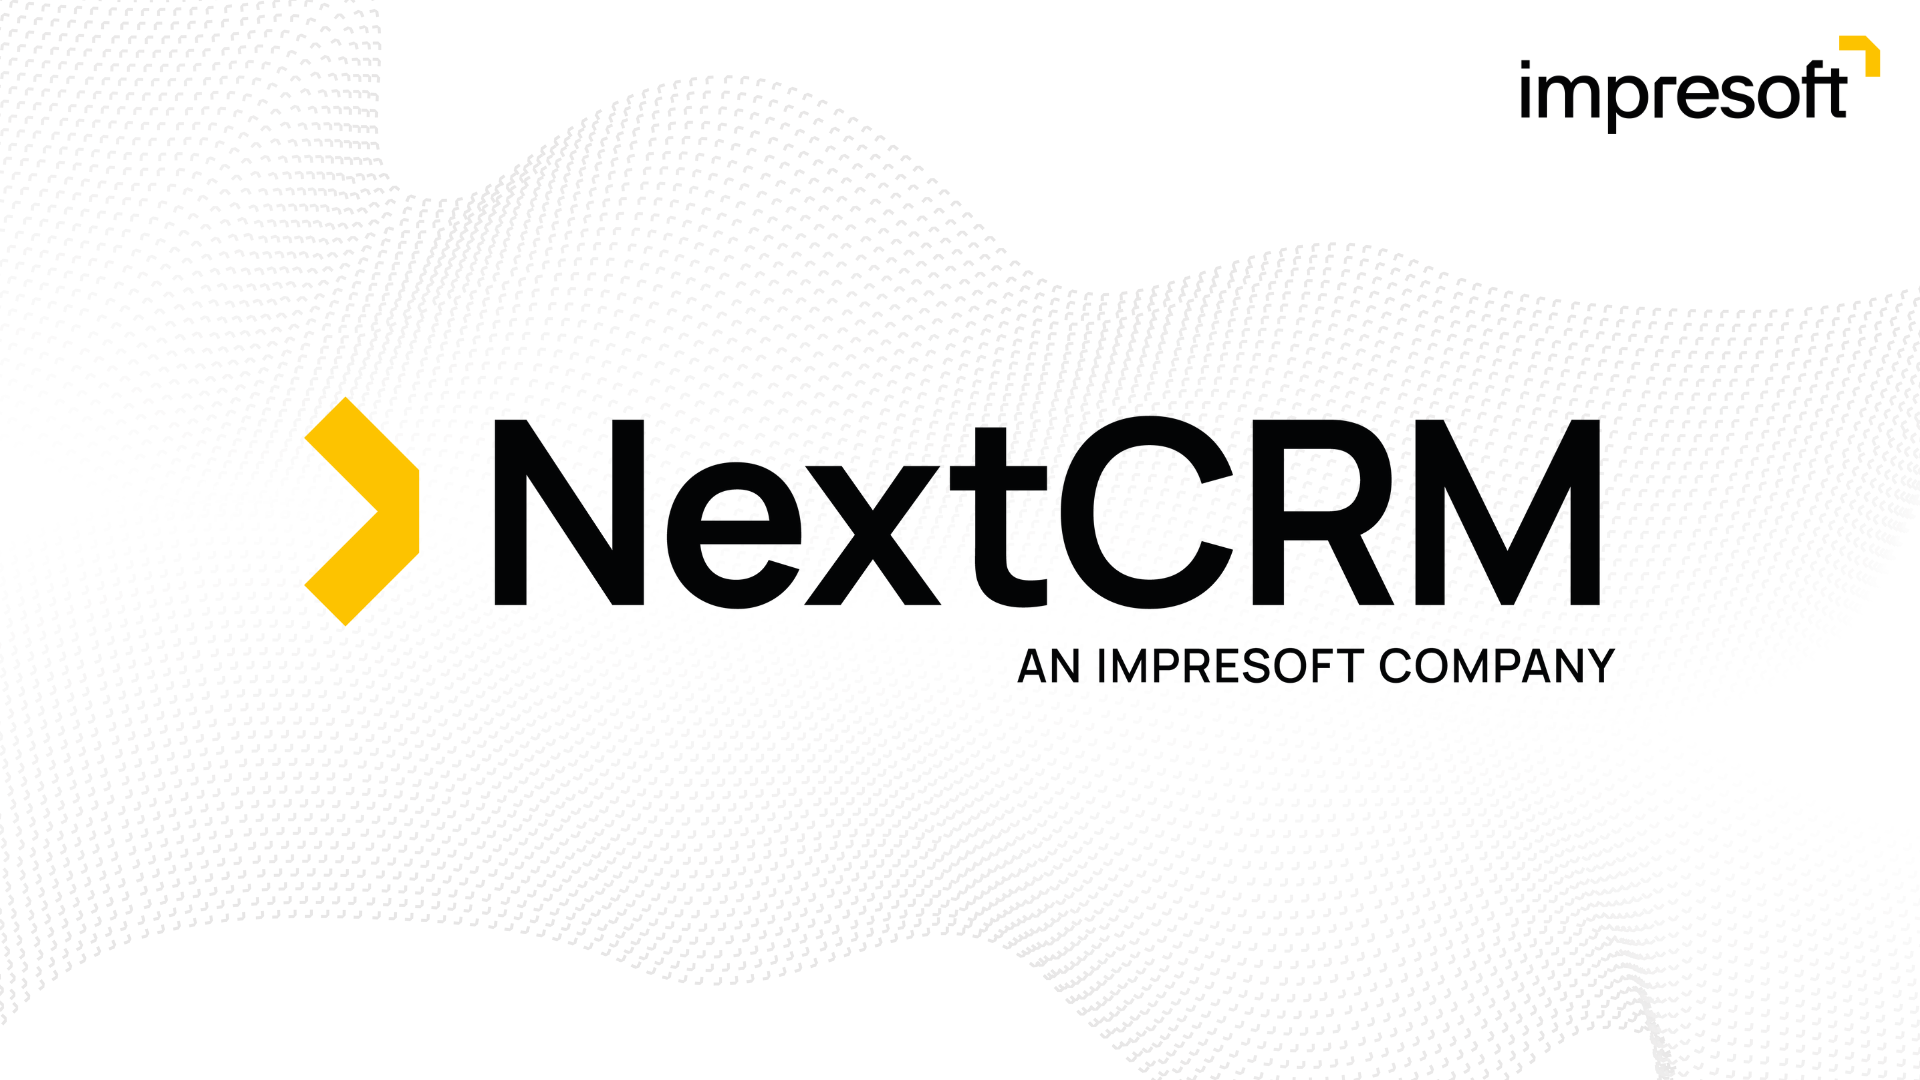 NextCRM annuncia l'unione al gruppo Impresoft